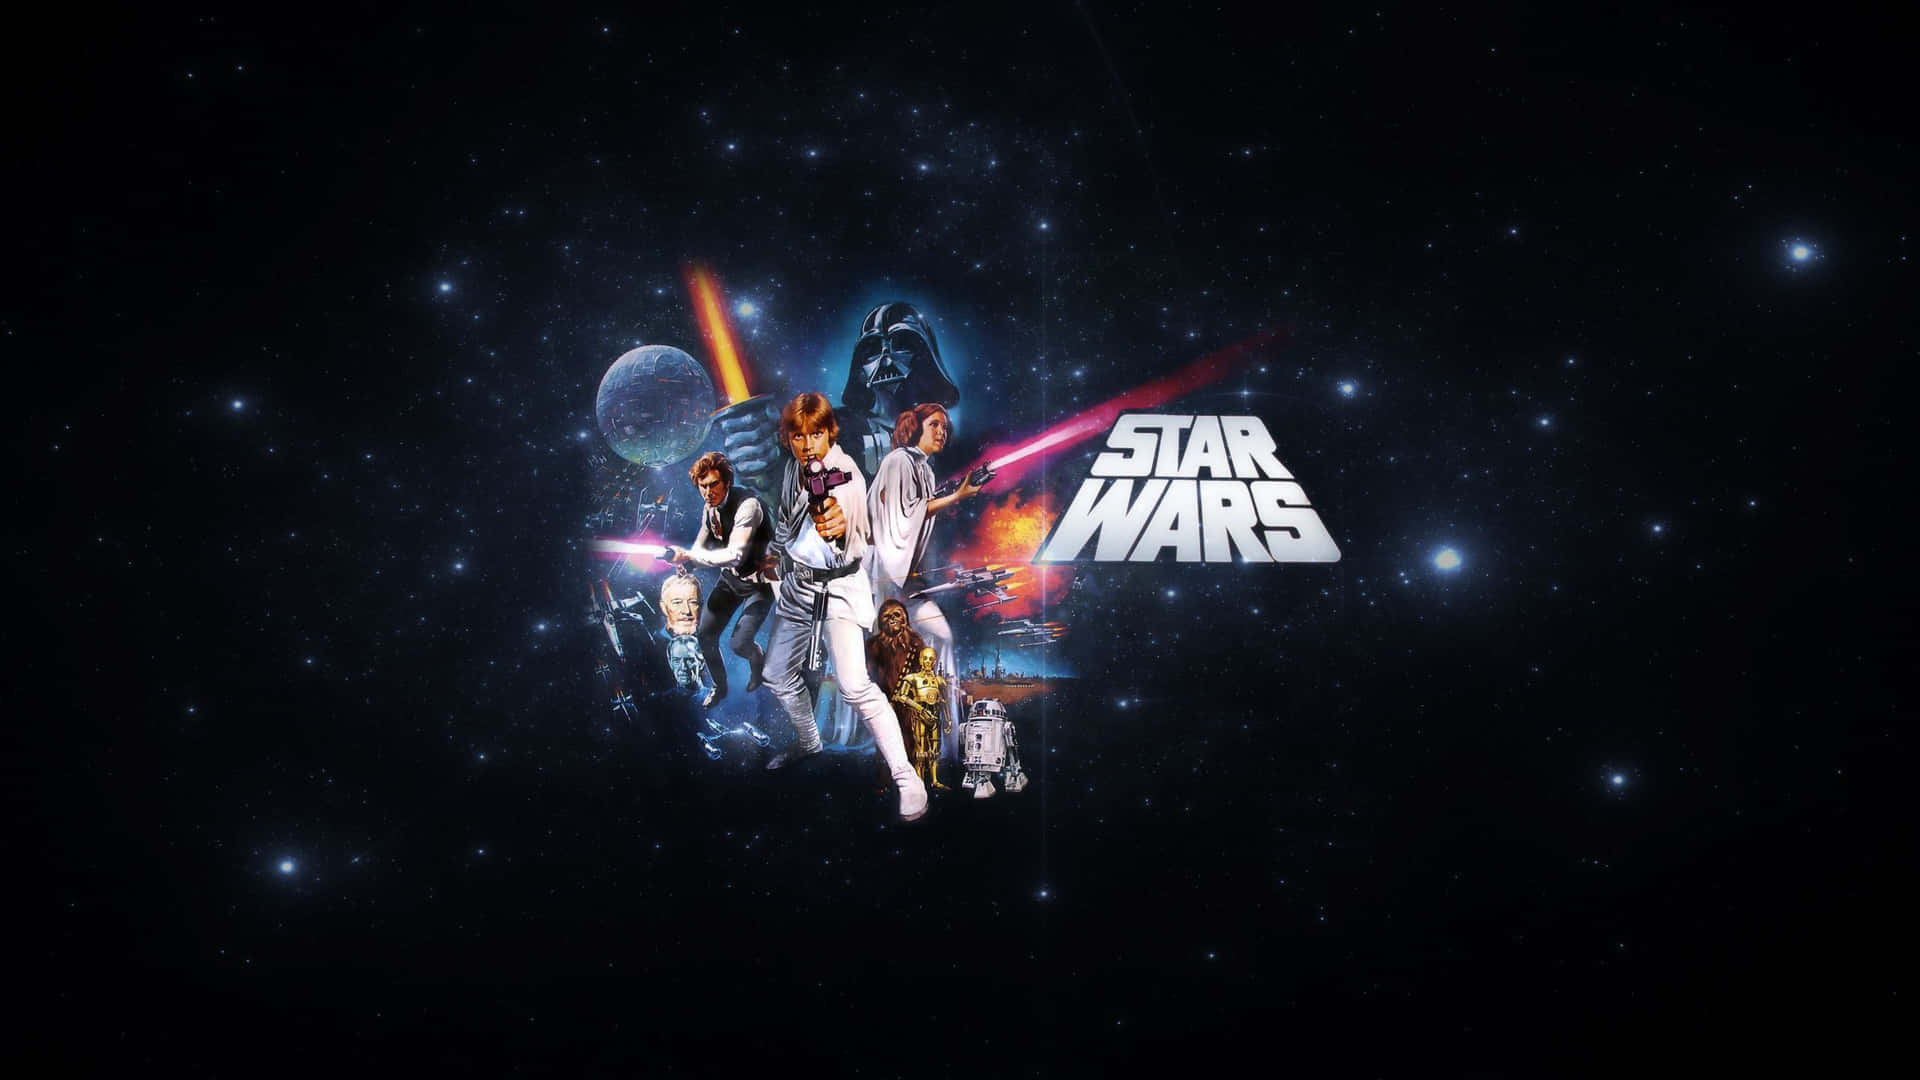 Luke Skywalker faces Darth Vader in an epic battle of light and dark Wallpaper